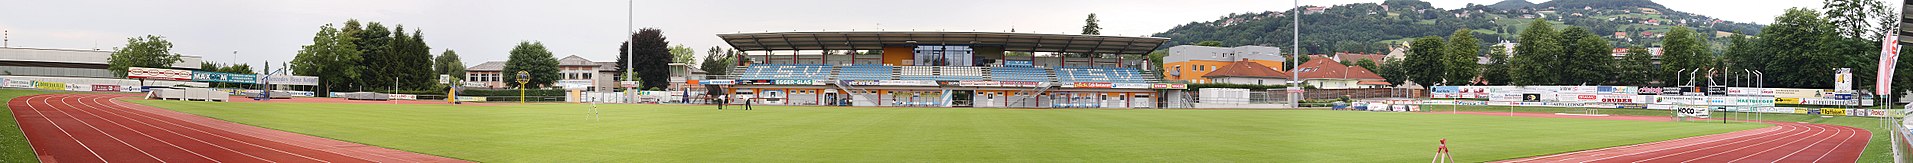 1920px-Stadion_Hartberg_Panoramabild.jpg